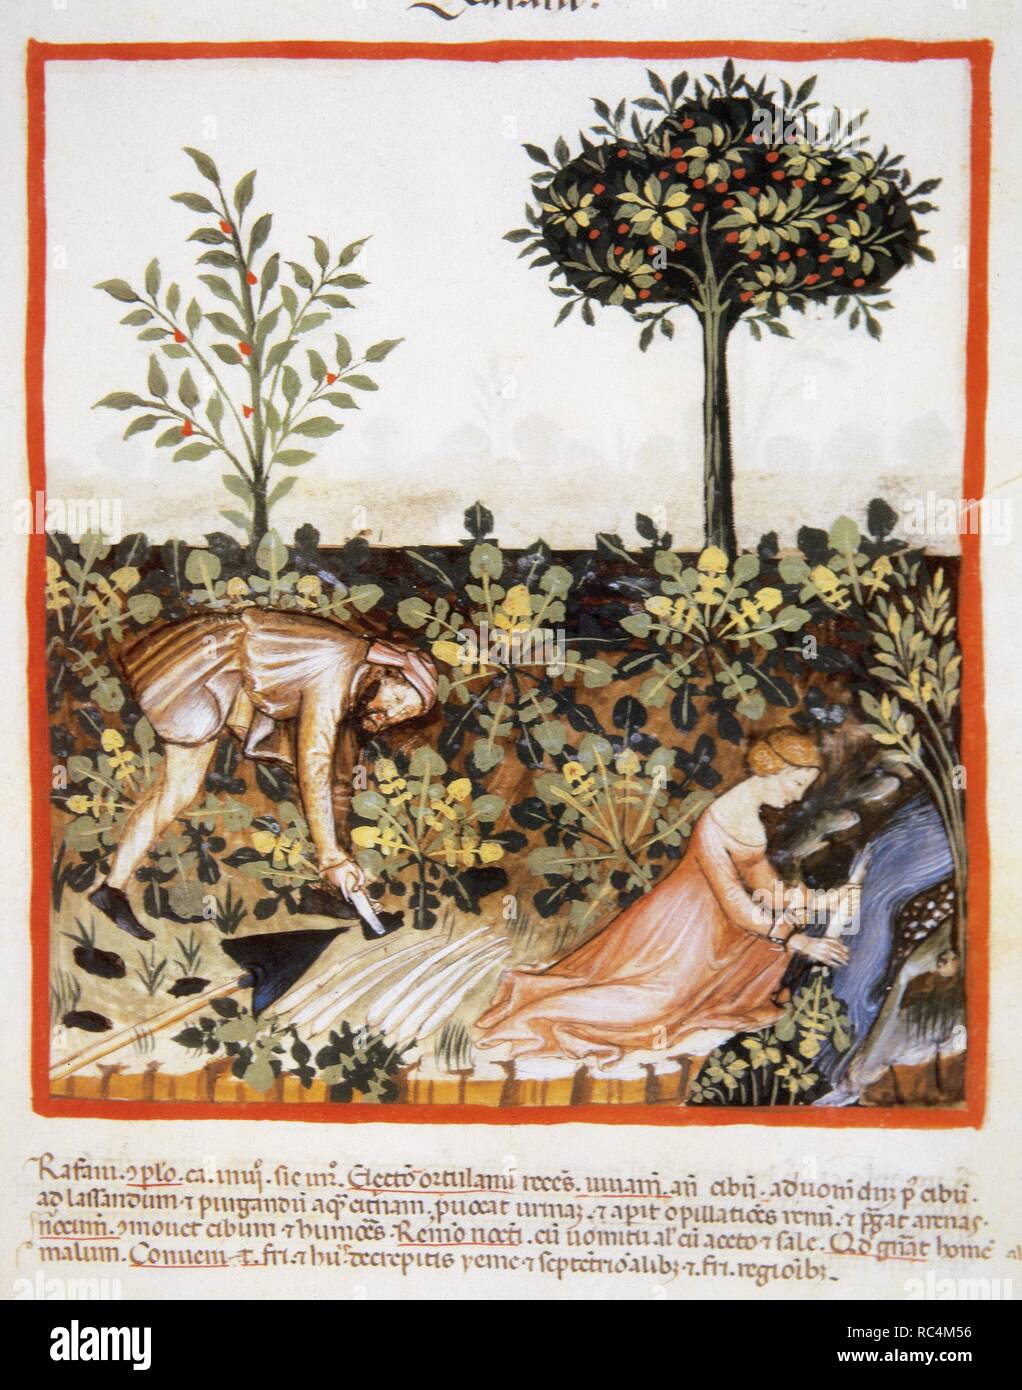 Tacuinum Sanitatis. 14th century. Medieval handbook of health. Man gathering turnips. Woman cleaning turnips in a river. Miniature. Fol. 52 r. Stock Photo